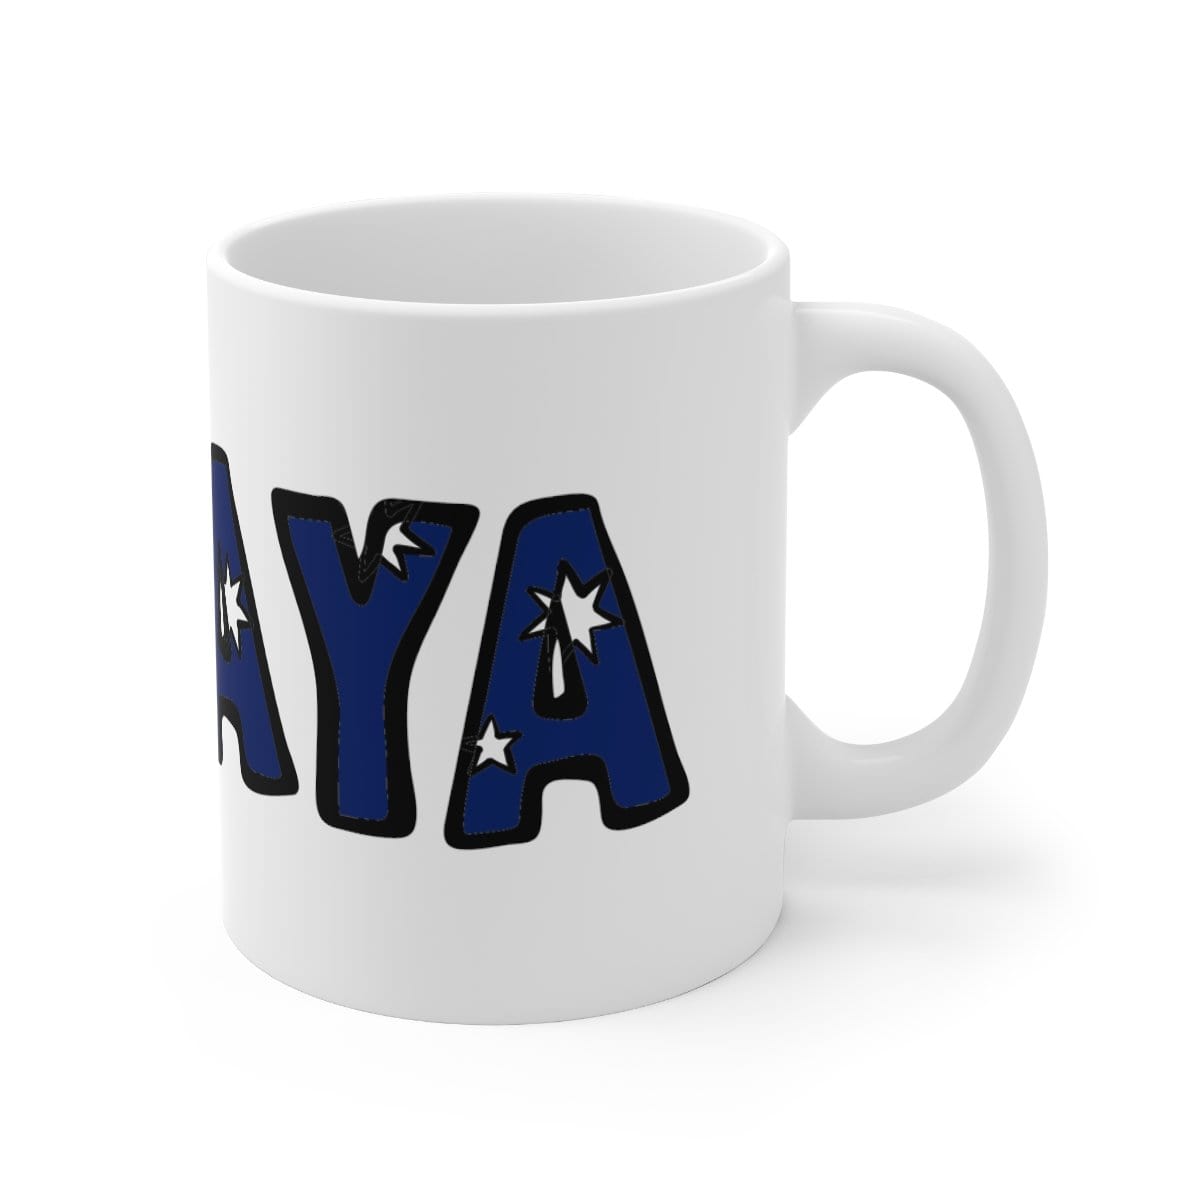 Straya 🐨 - Coffee Mug